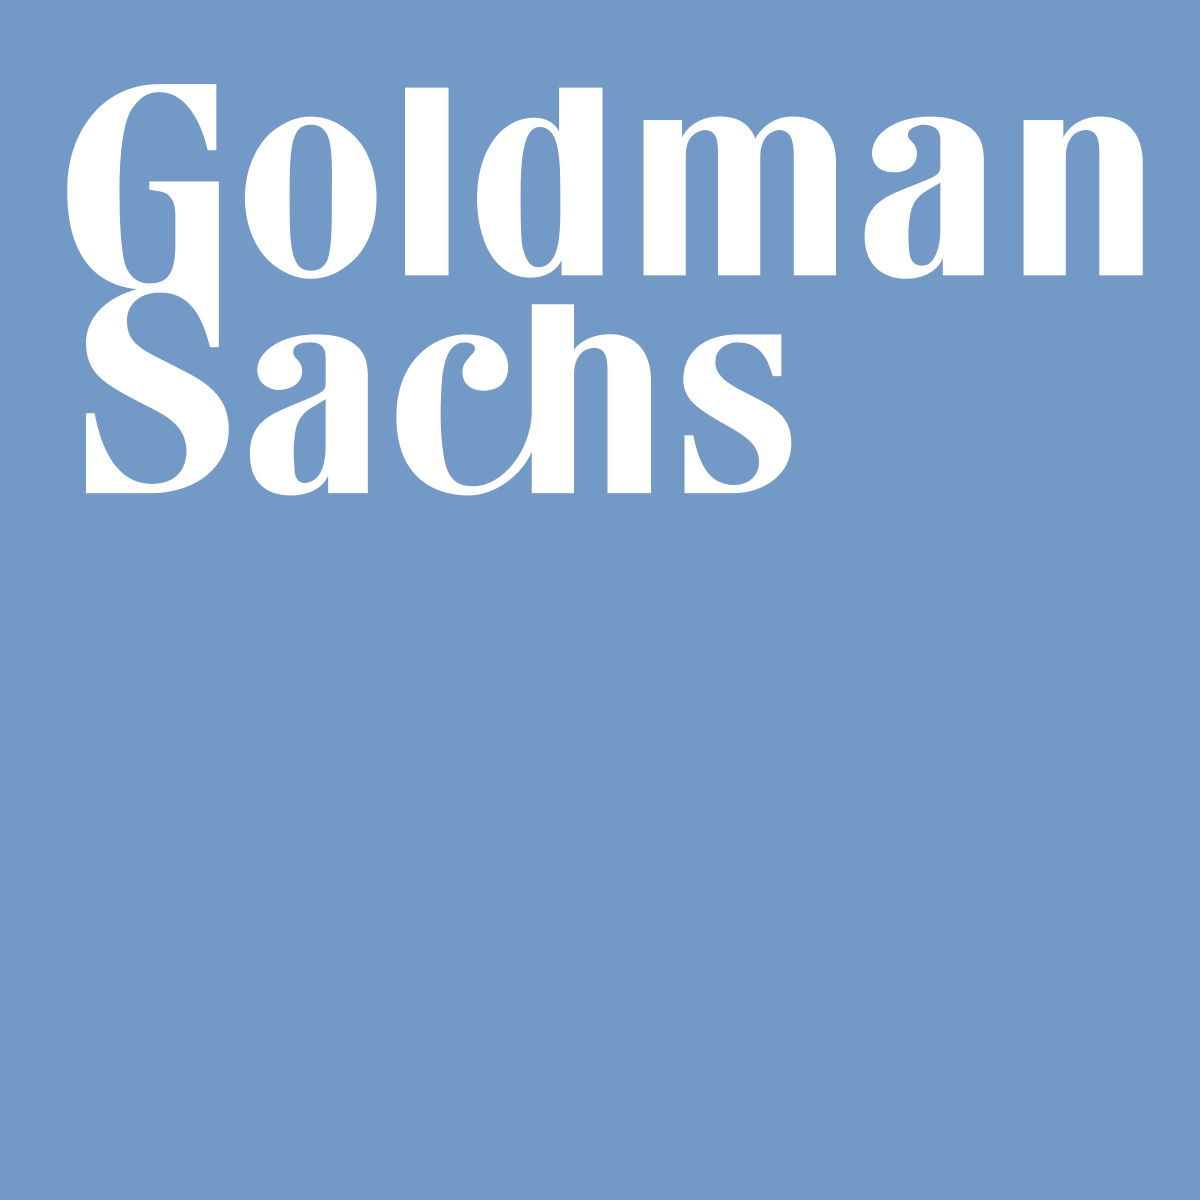 Goldman_Sachs.svg.png